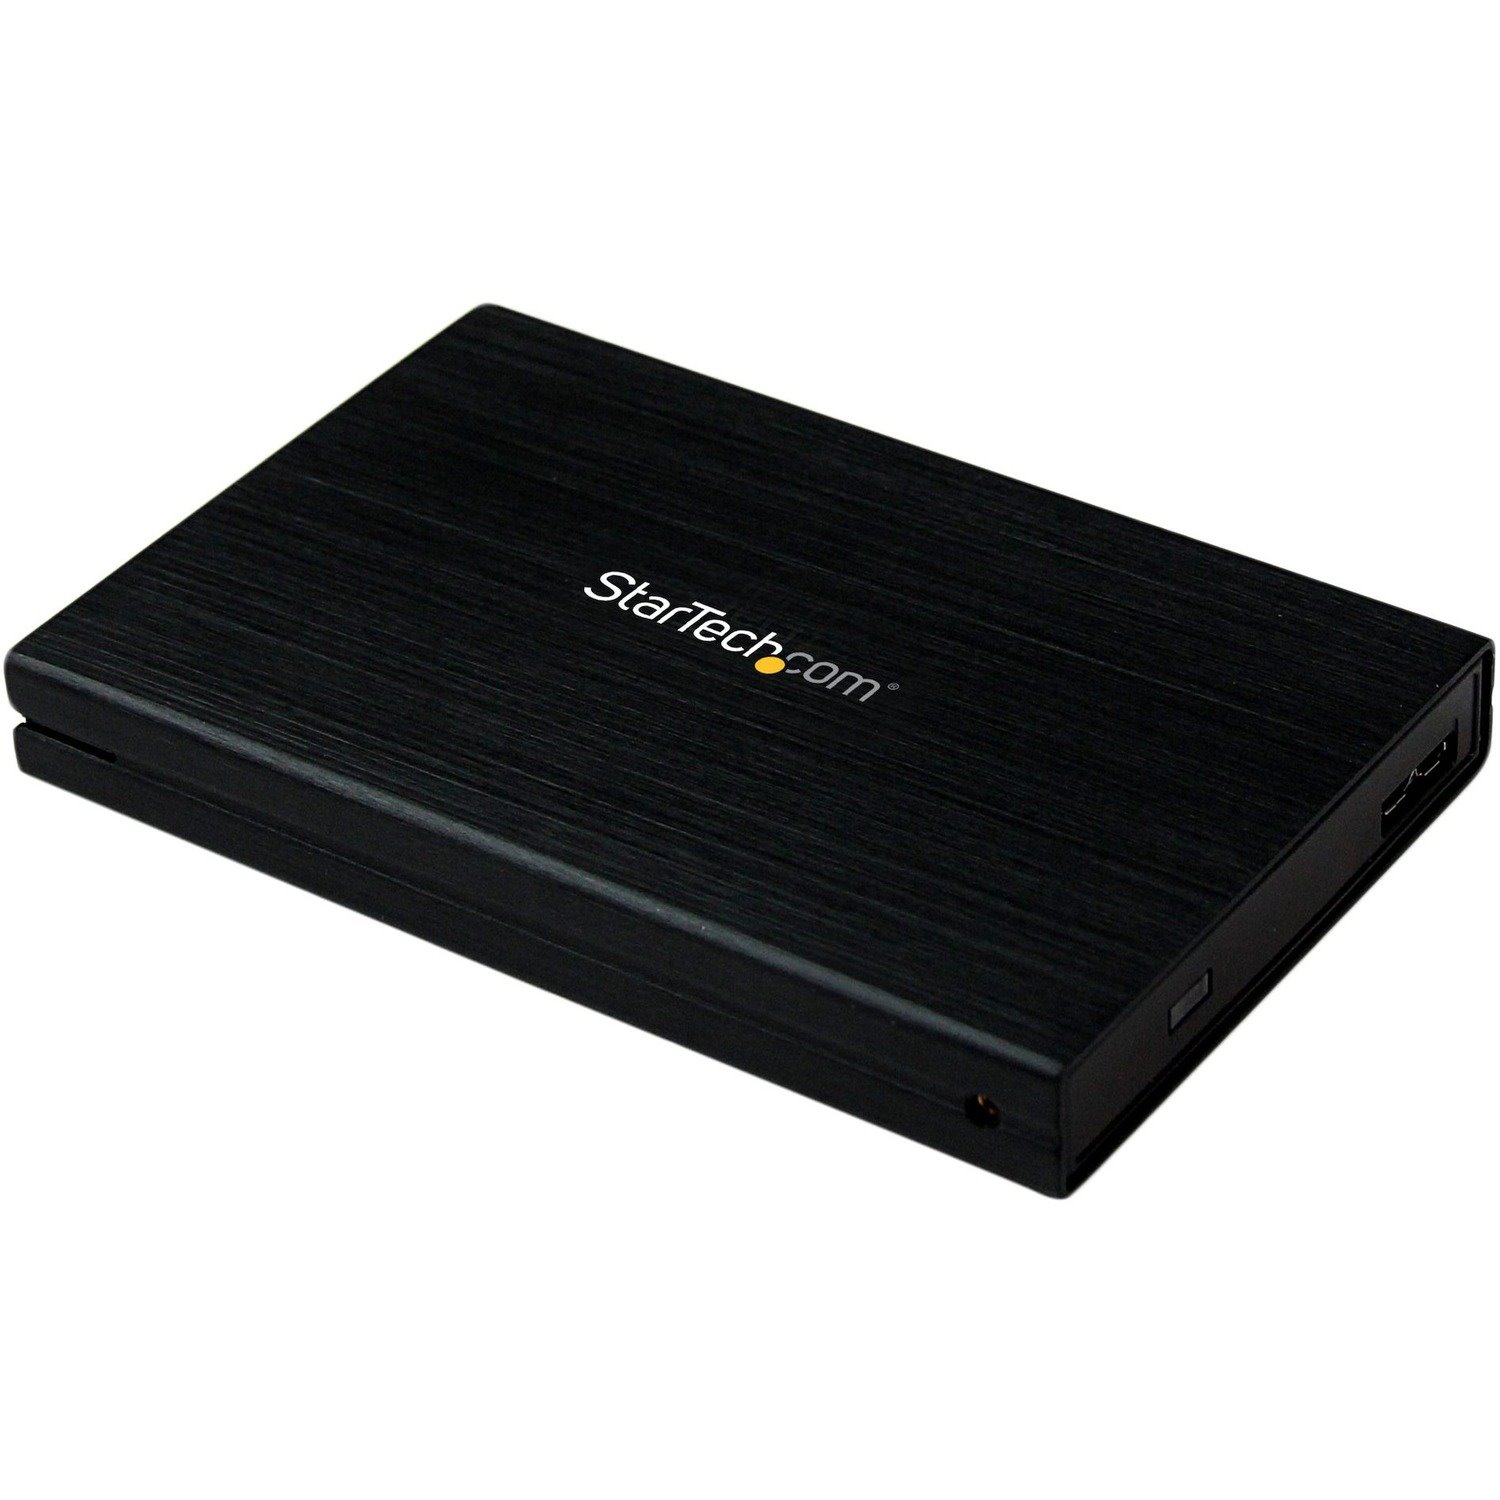 StarTech.com Drive Enclosure SATA/600 - USB 3.0 Micro-B Host Interface - UASP Support External - Black